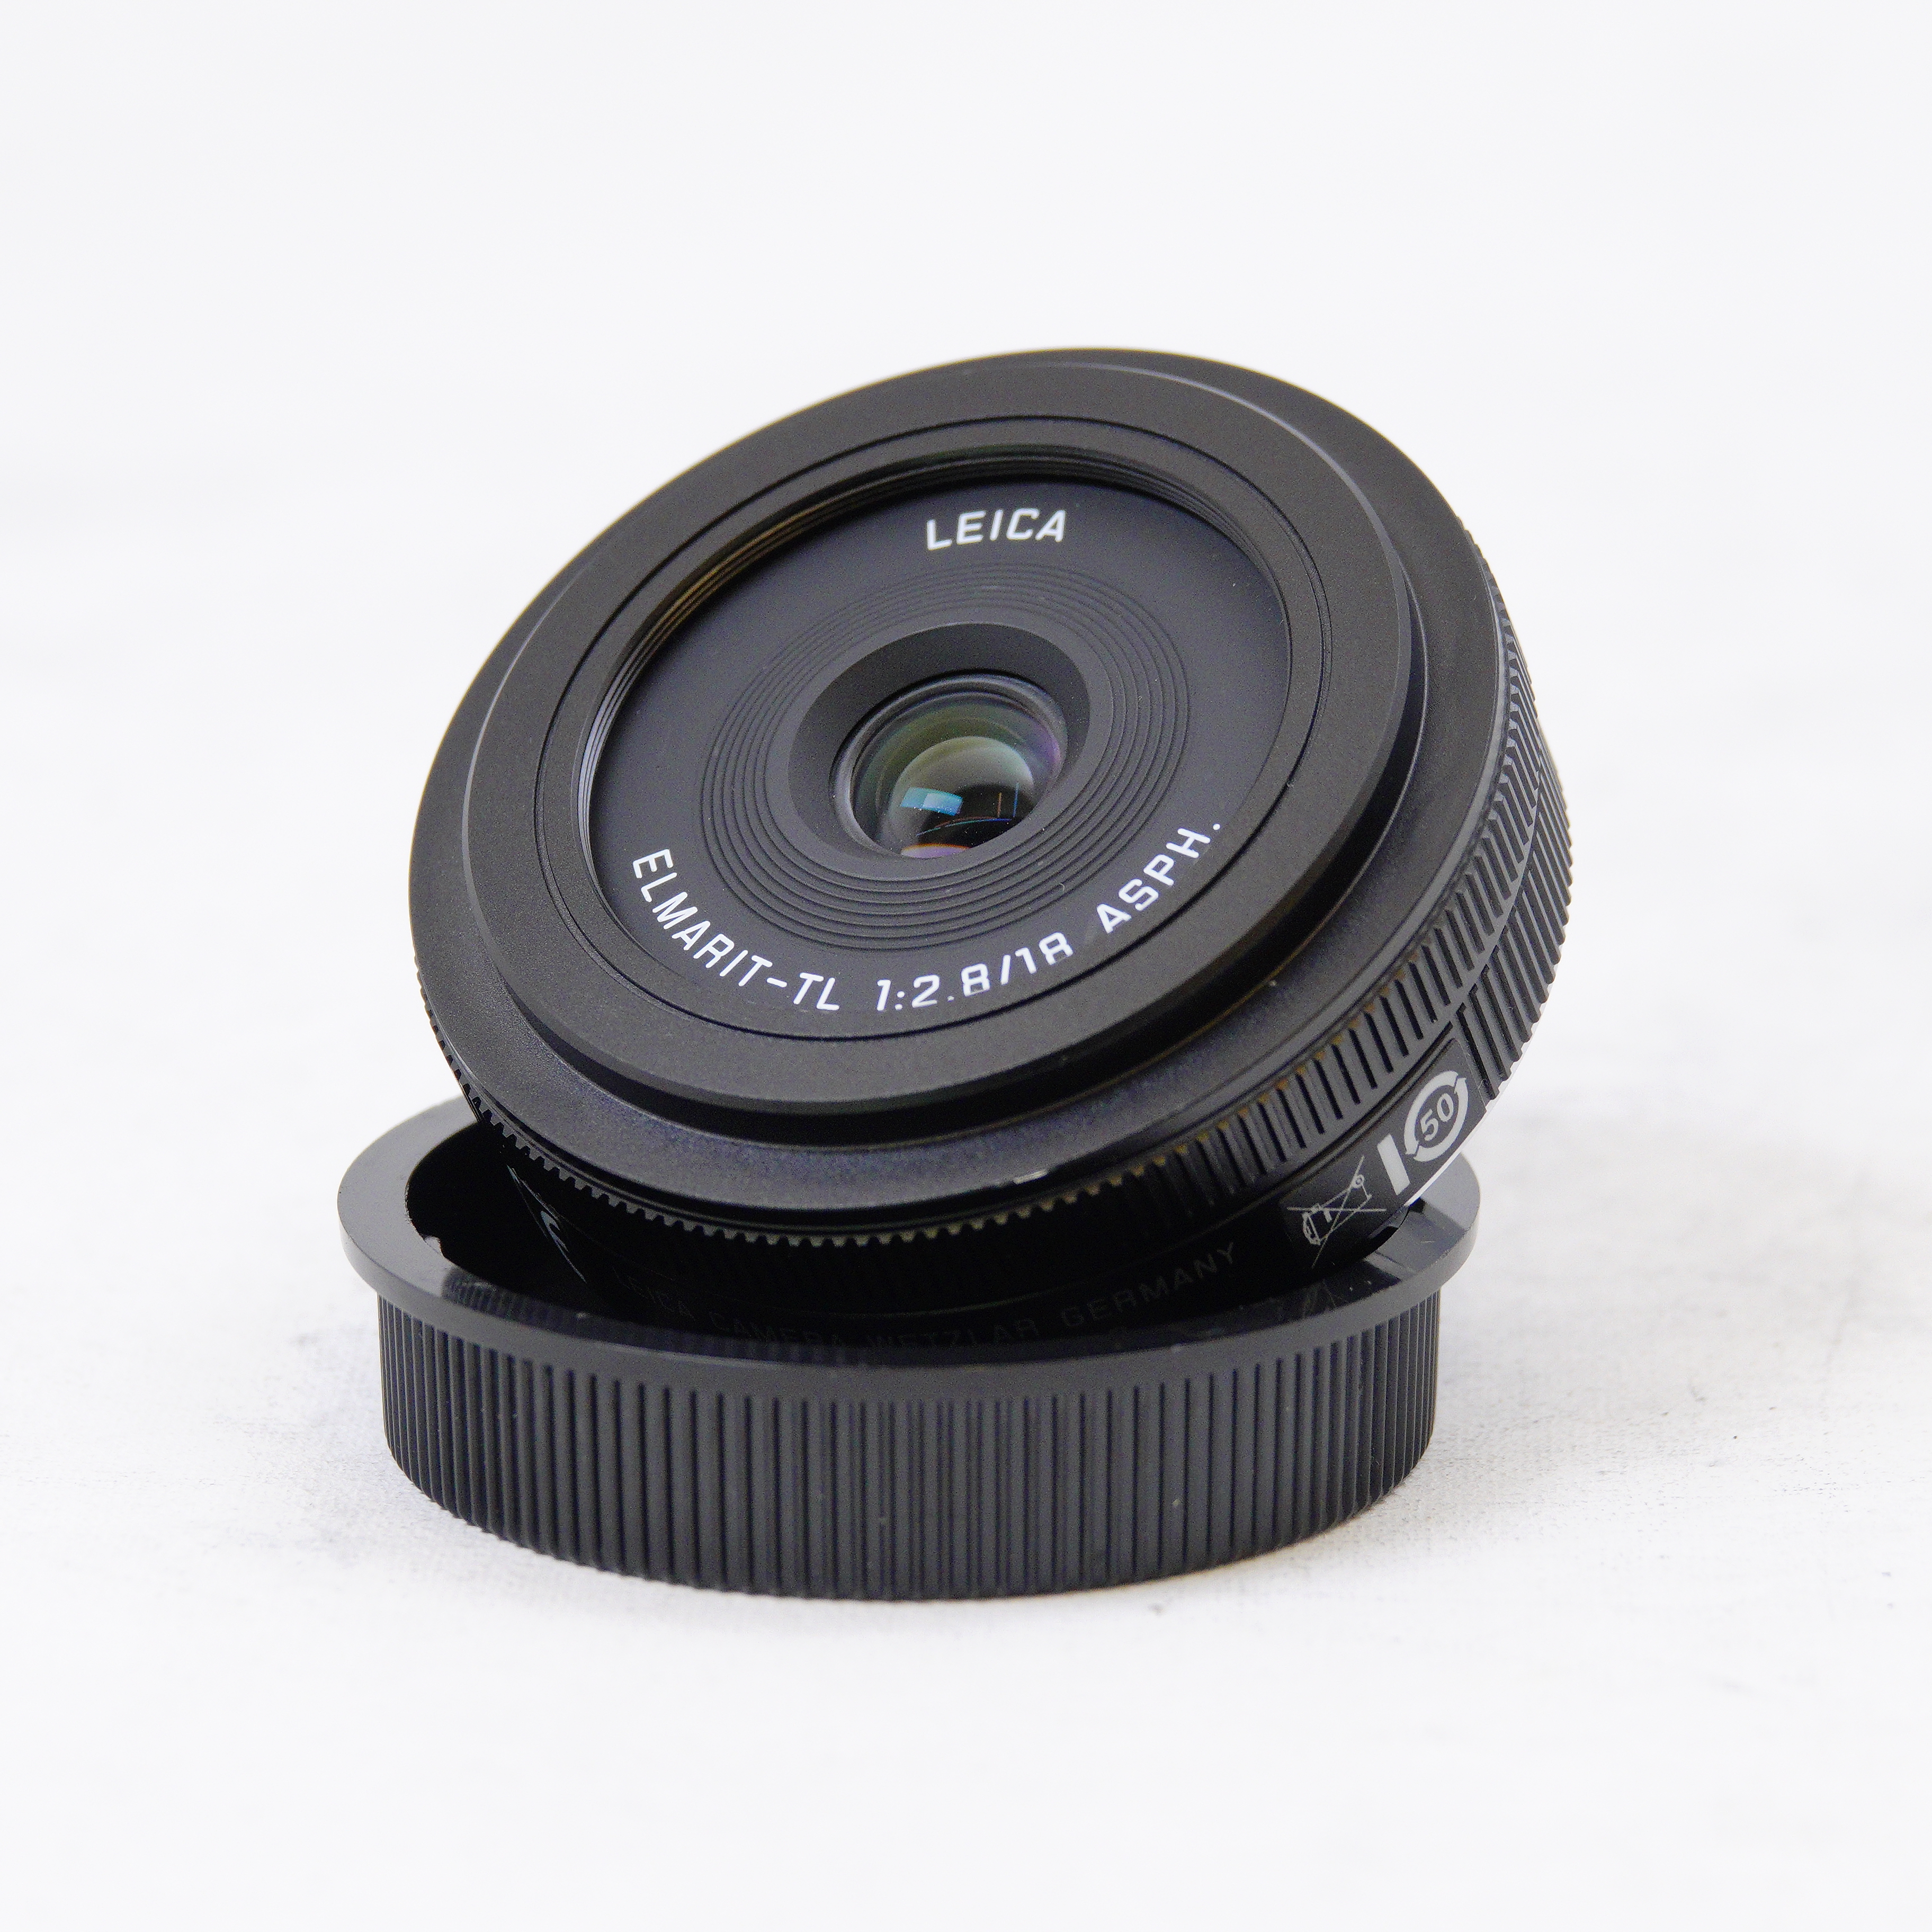  Leica Elmarit-TL 18 mm f/2.8 ASPH (Black) - Usado